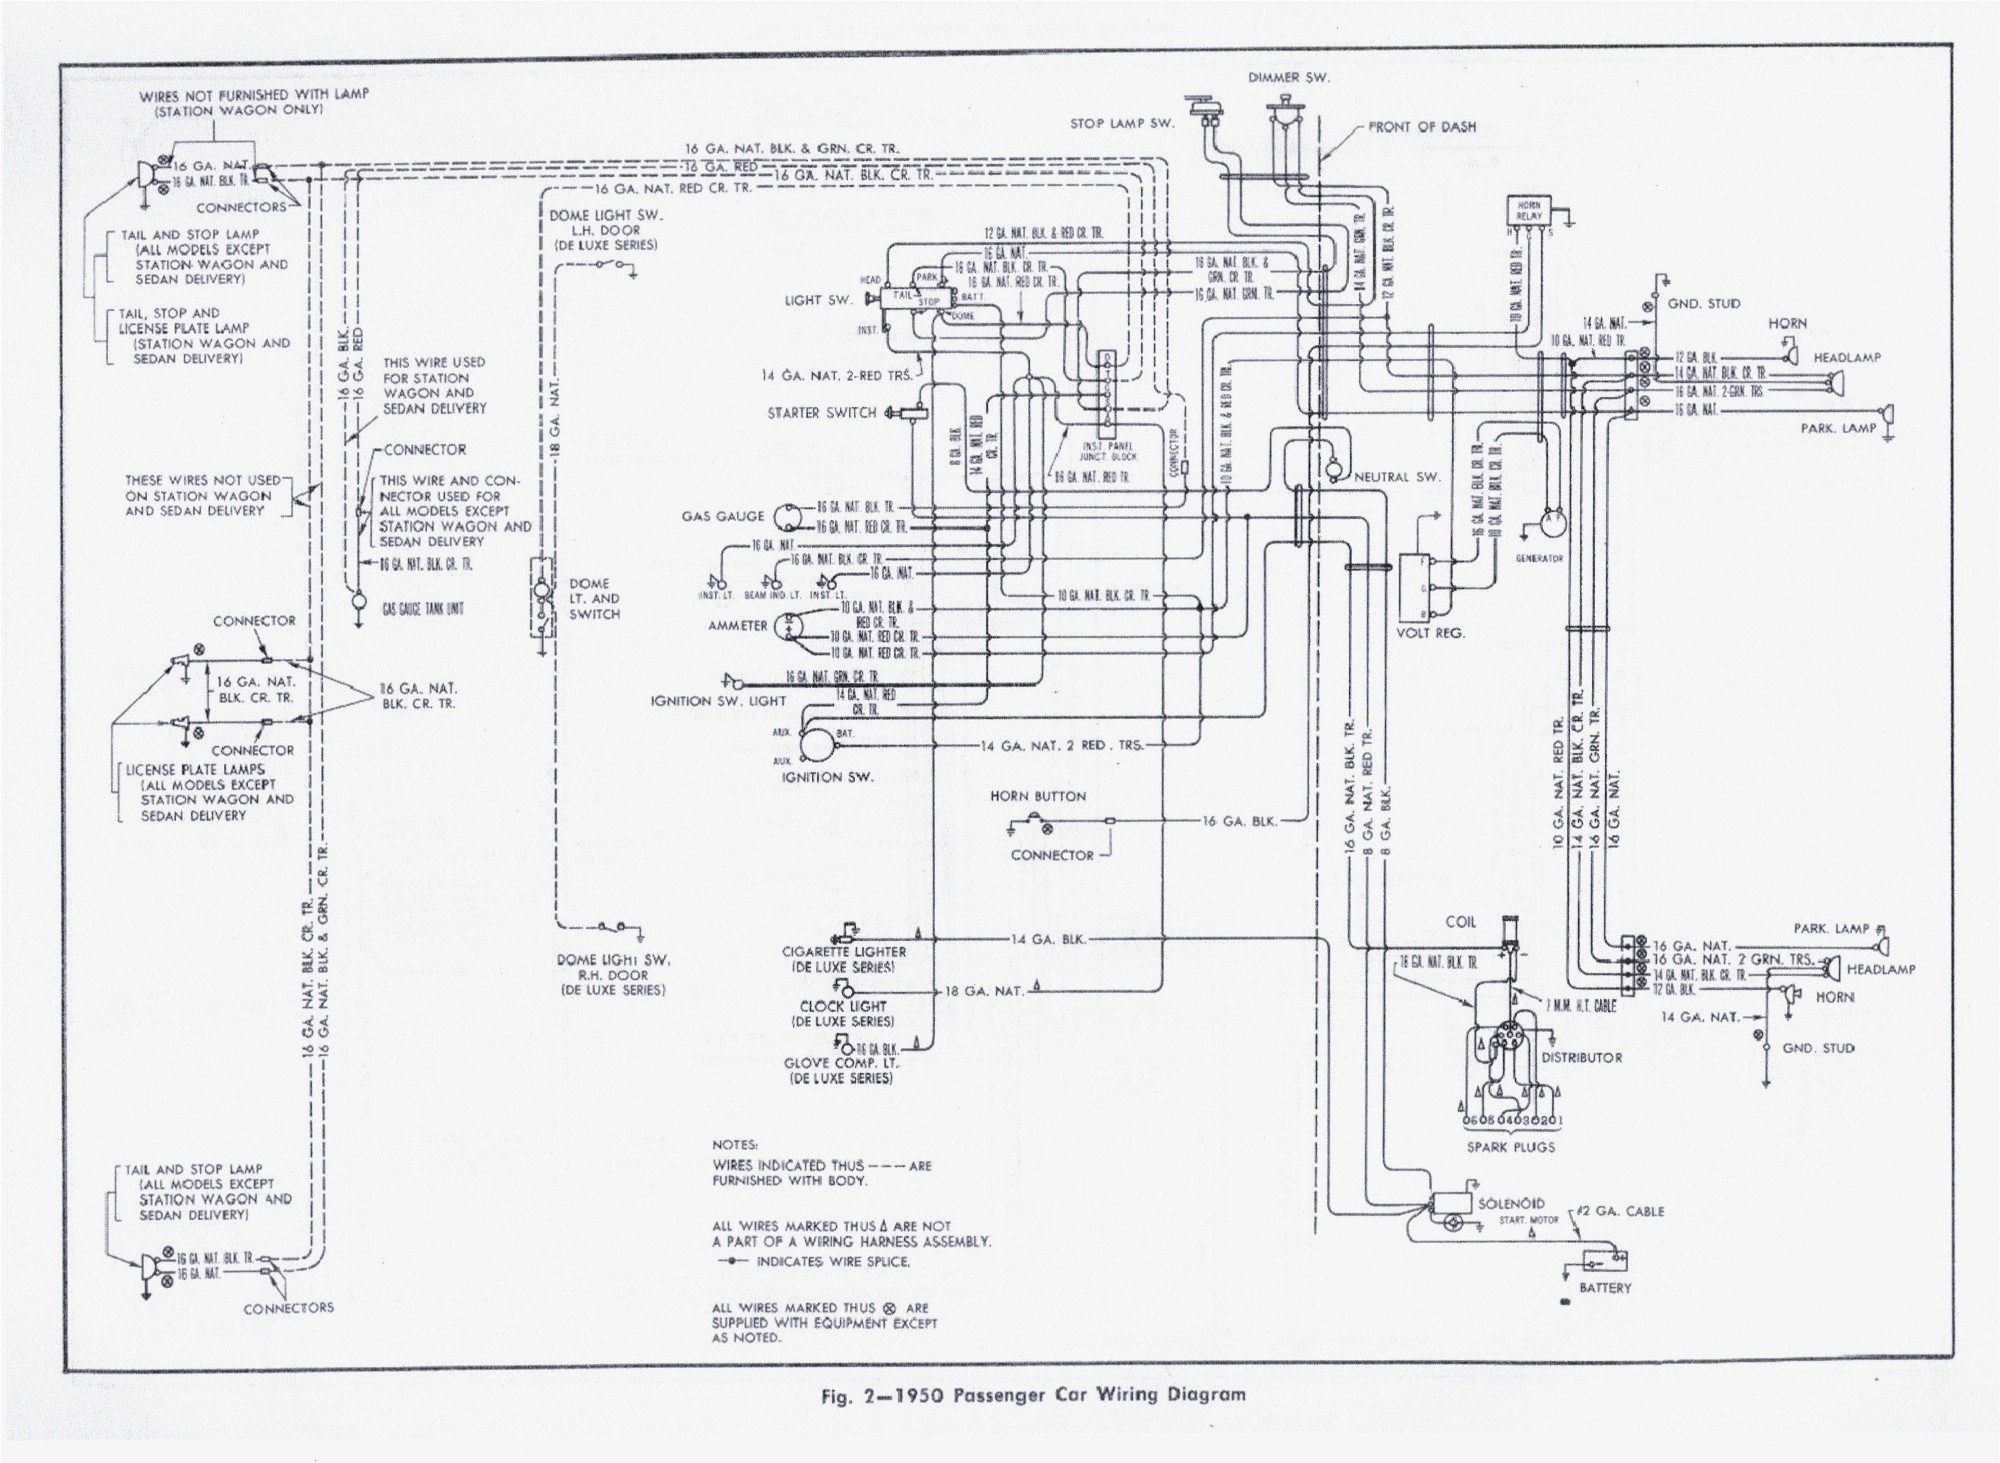 Mitsubishi Truck Wiring Diagram 1951 Chevy Truck Wiring Diagram Chevrolet Wiring Diagrams Instructions Of Mitsubishi Truck Wiring Diagram